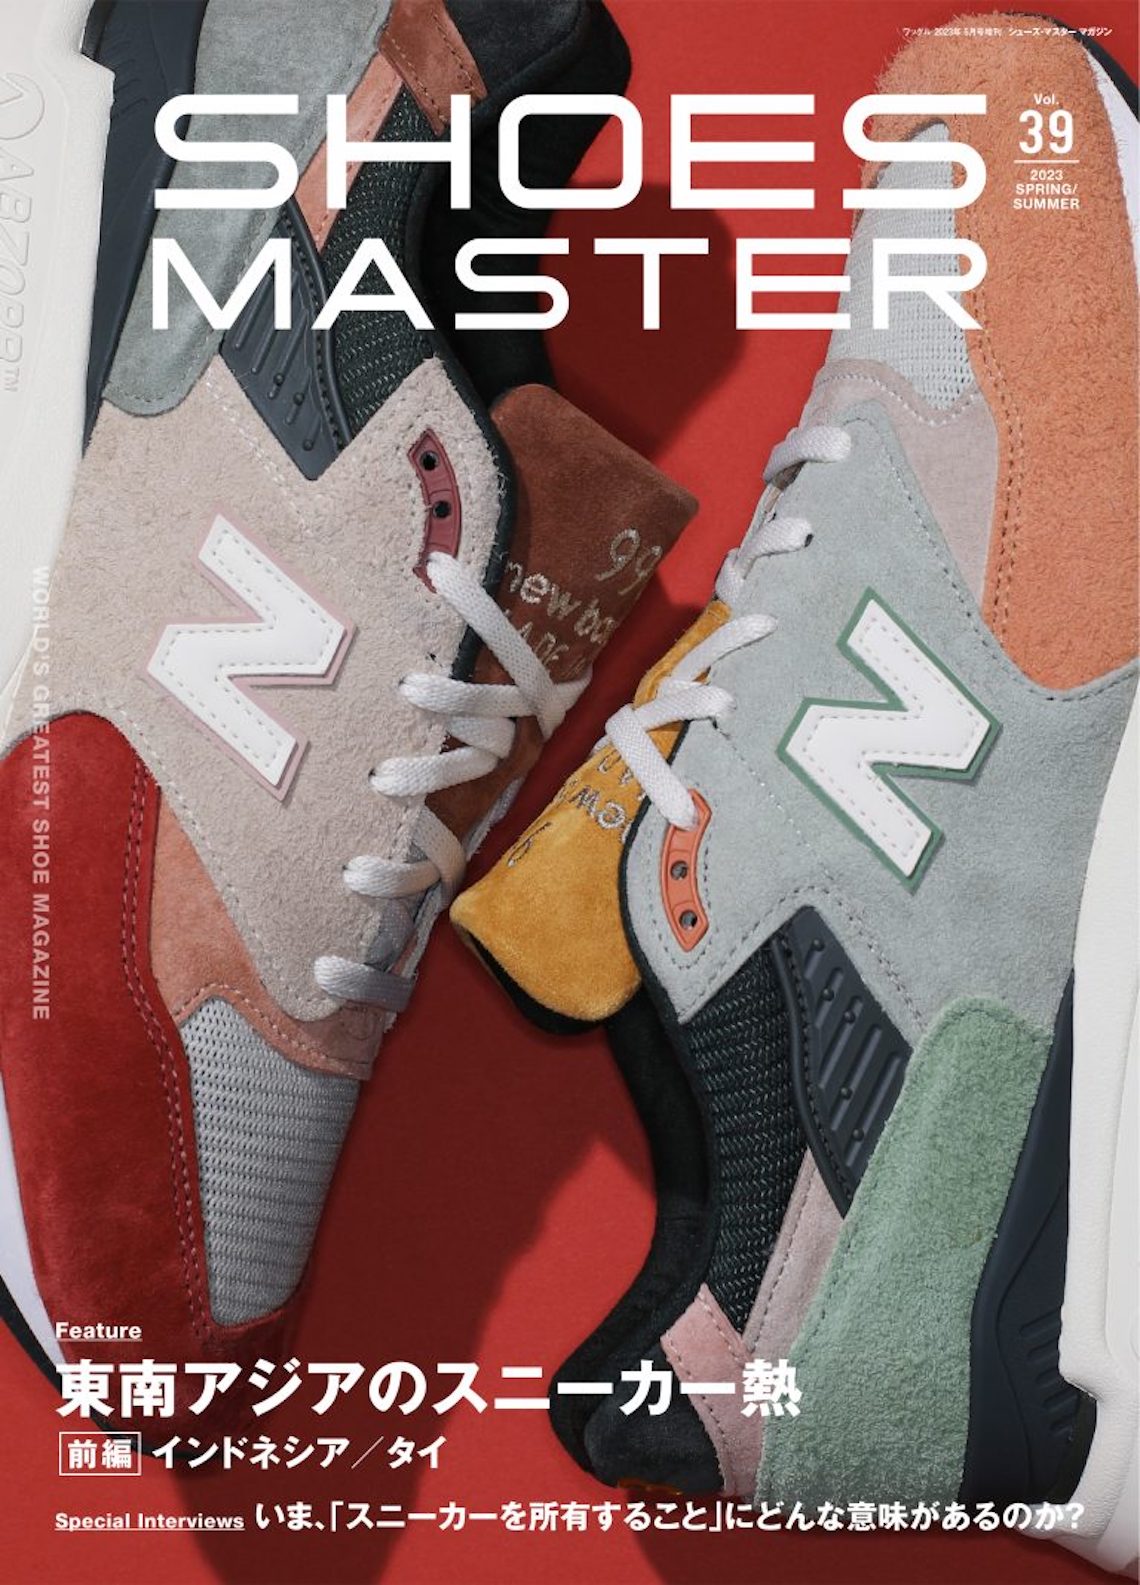 Poner a prueba o probar Matemáticas Absorbente Kith x New Balance 998 "Multi-Color" Release Date | SneakerNews.com